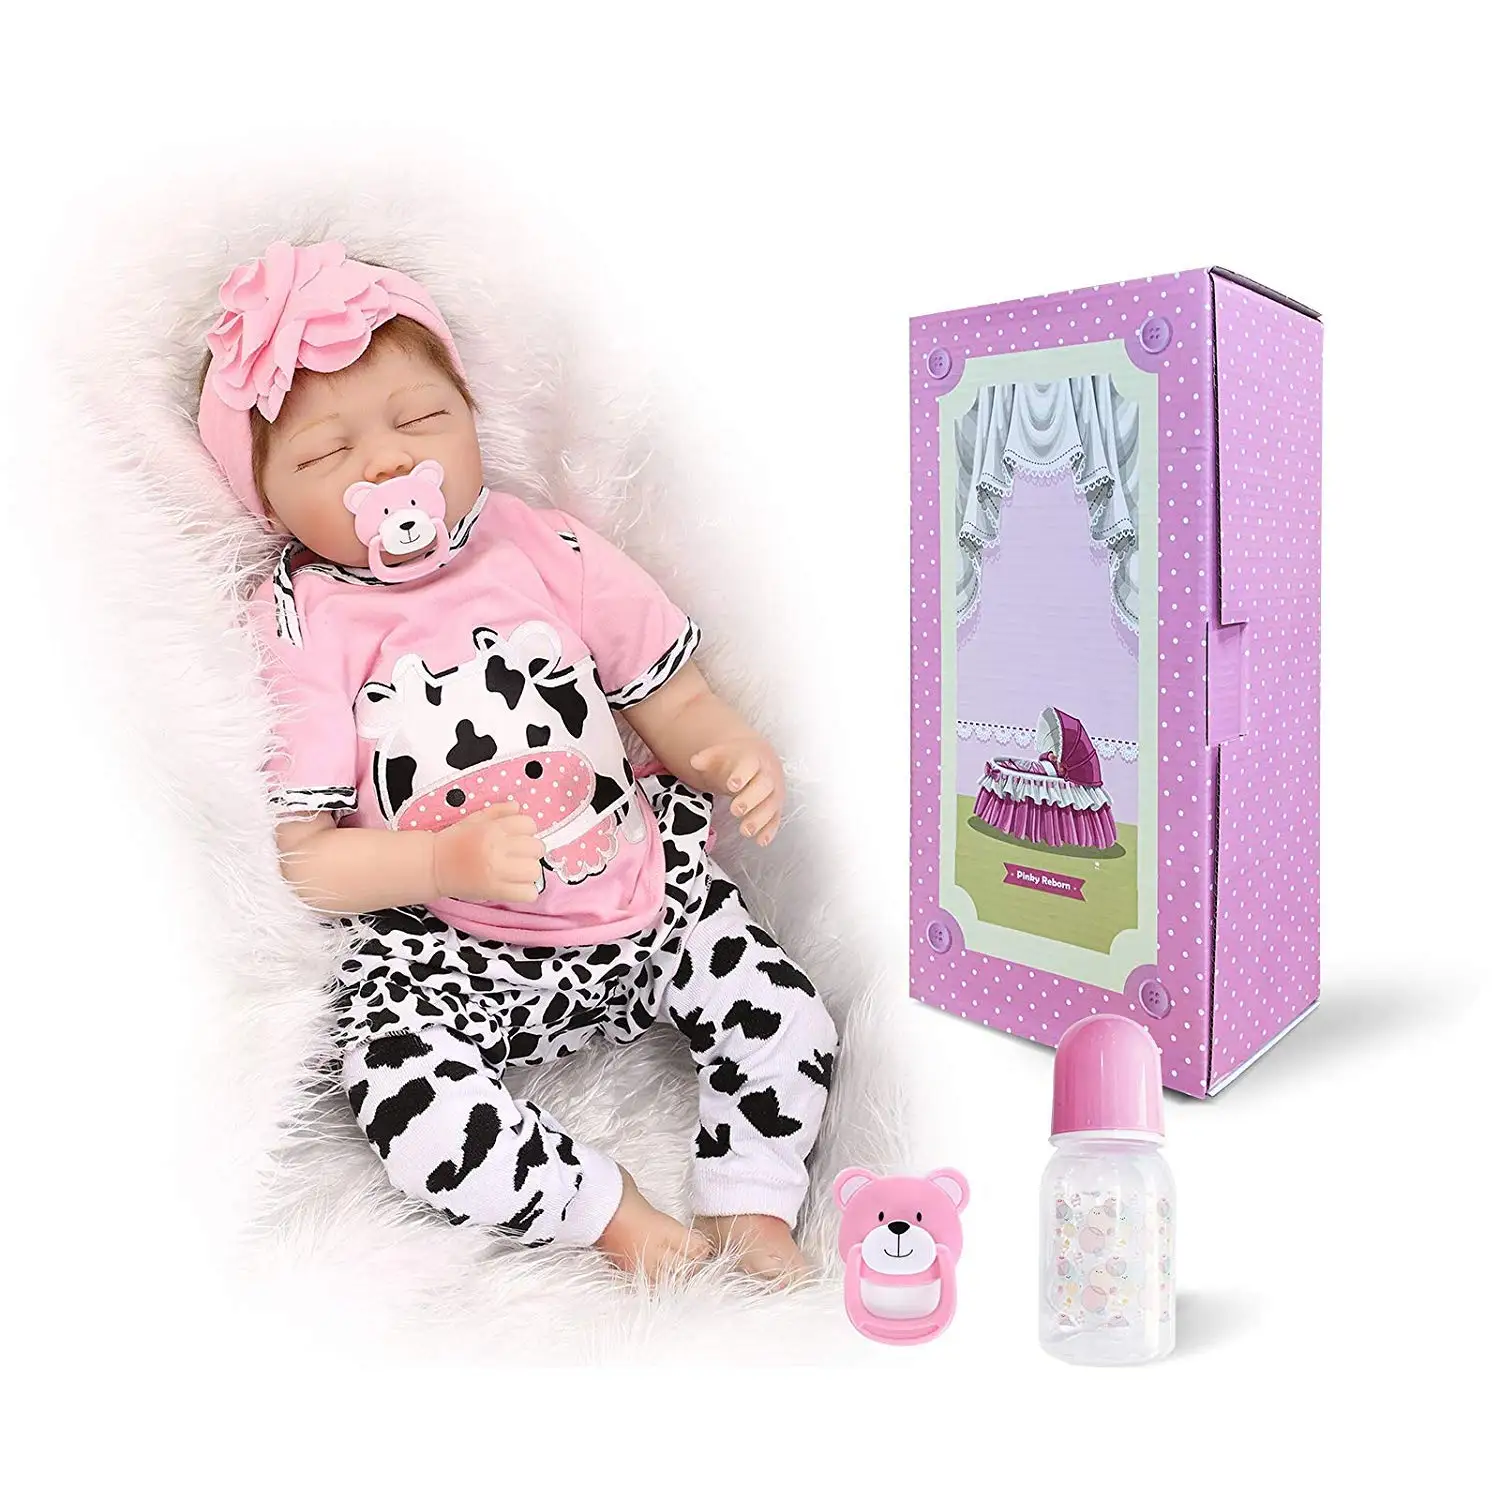 Reborn Toddler Dolls 22" Handmade Lifelike Baby Soft Silicone Vinyl Doll Girl 